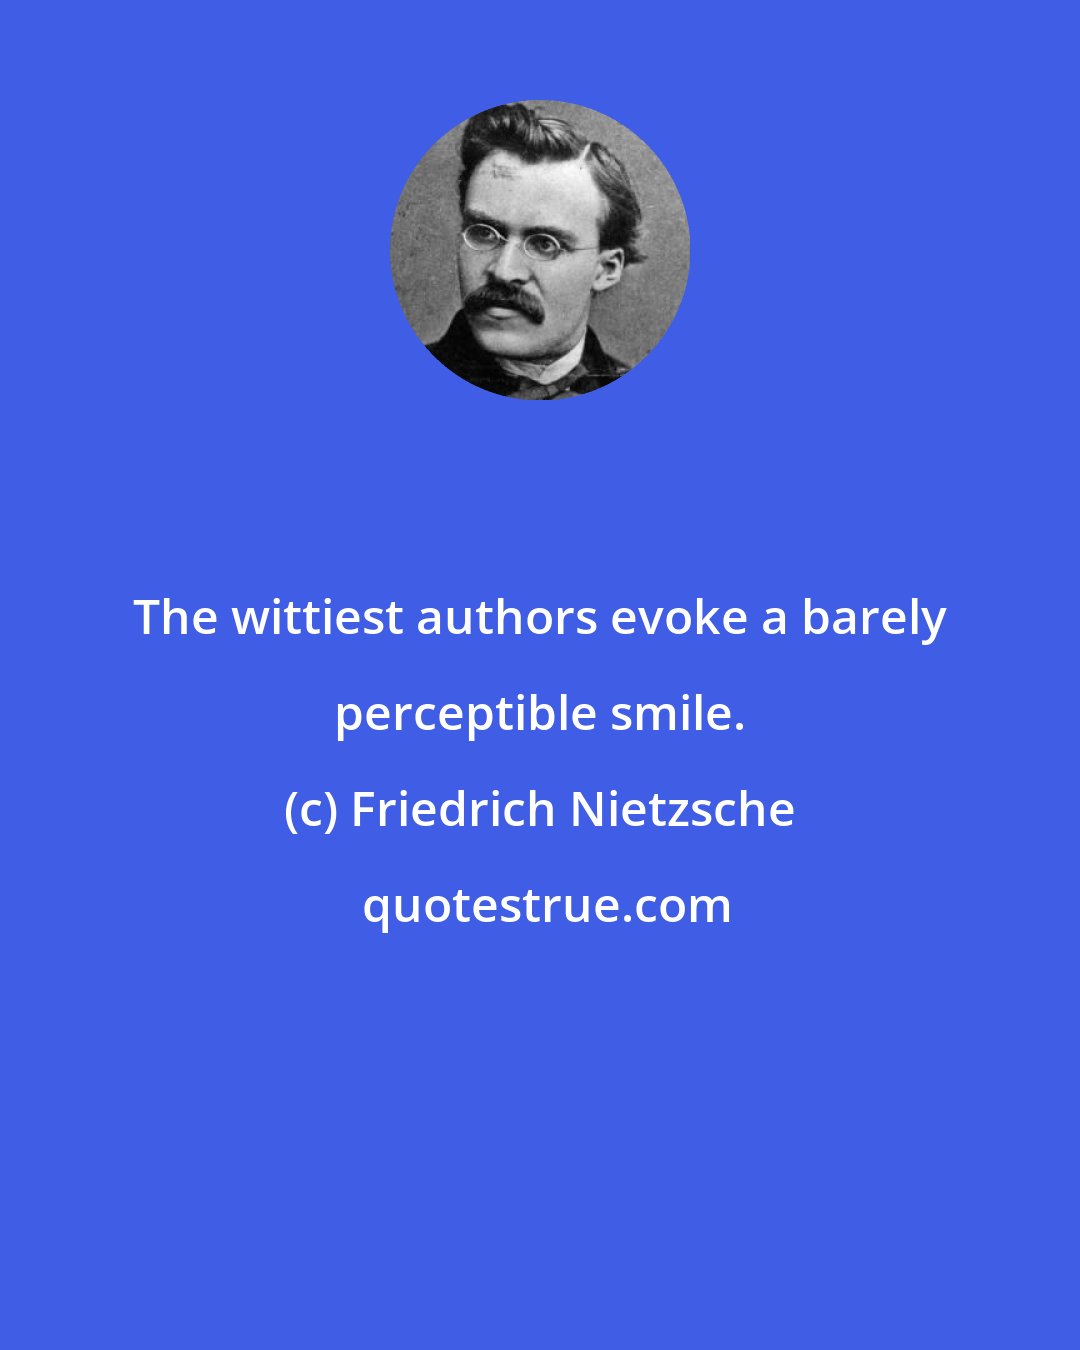 Friedrich Nietzsche: The wittiest authors evoke a barely perceptible smile.